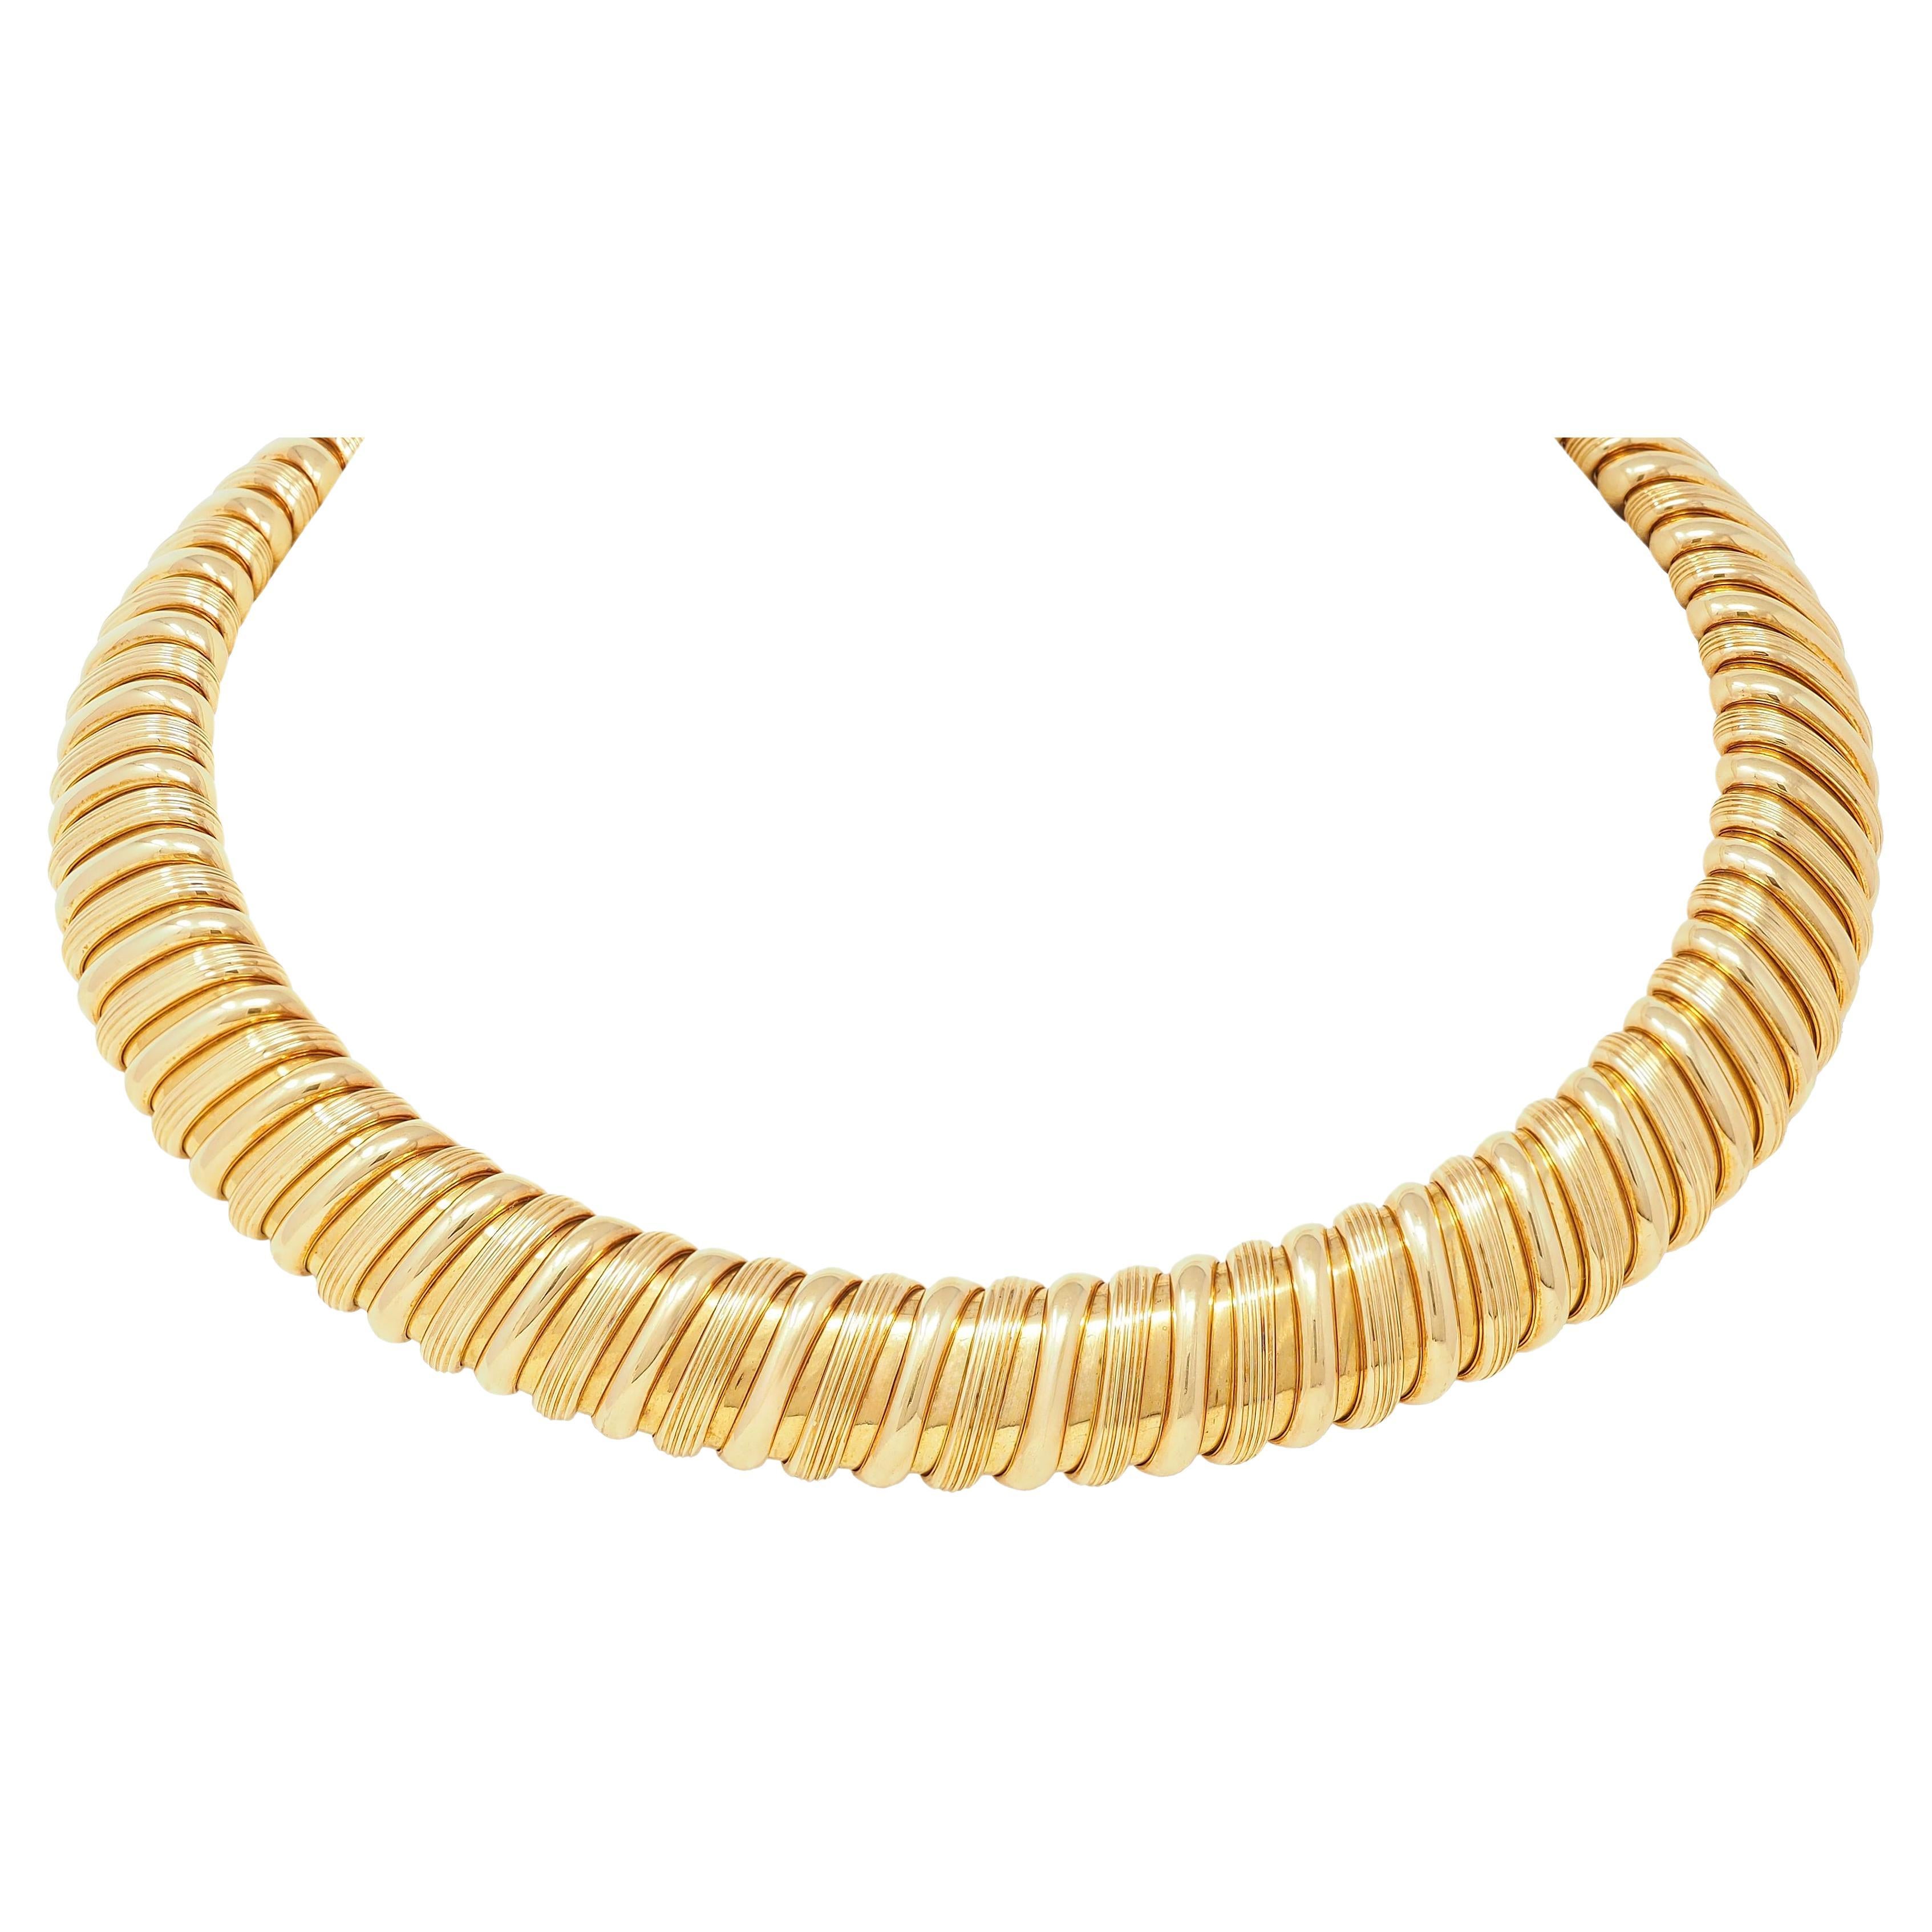 Bulgari 1980's 18 Karat Yellow Gold Twisting Tubogas Vintage Collar Necklace